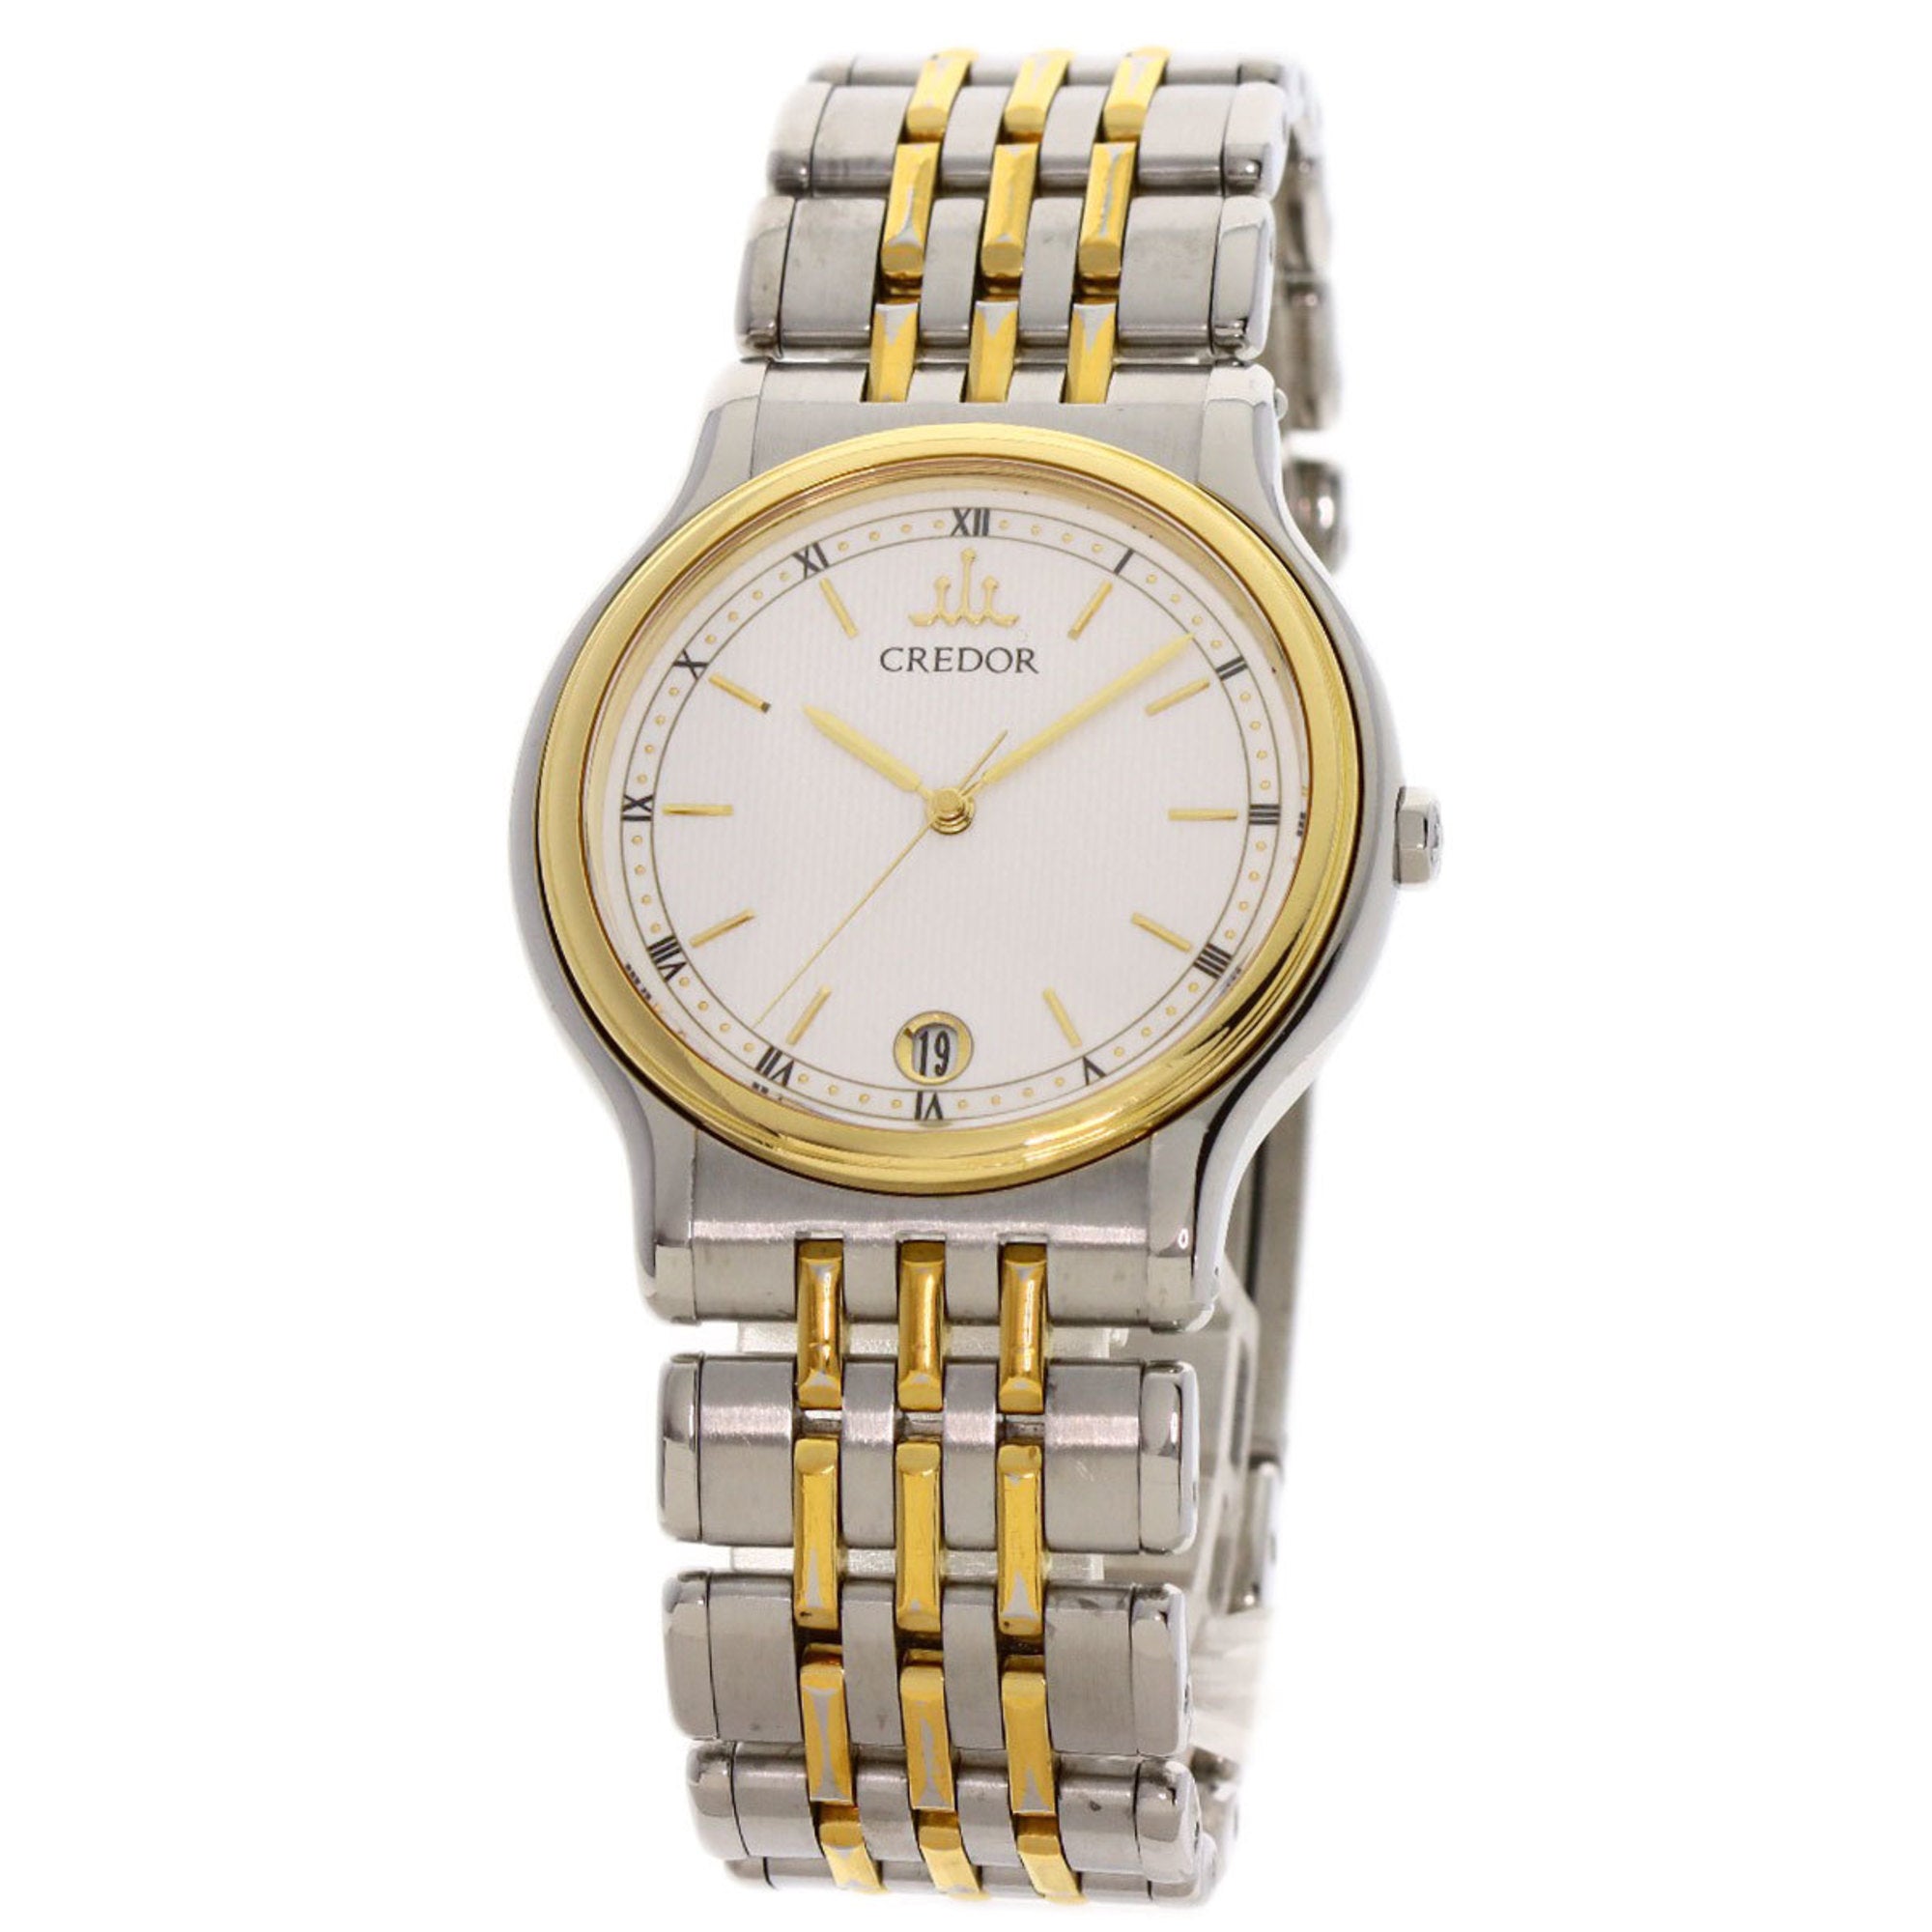 SEIKO Credor Pacific 8J82-6A20 quartz watch K18/SS silver/gold